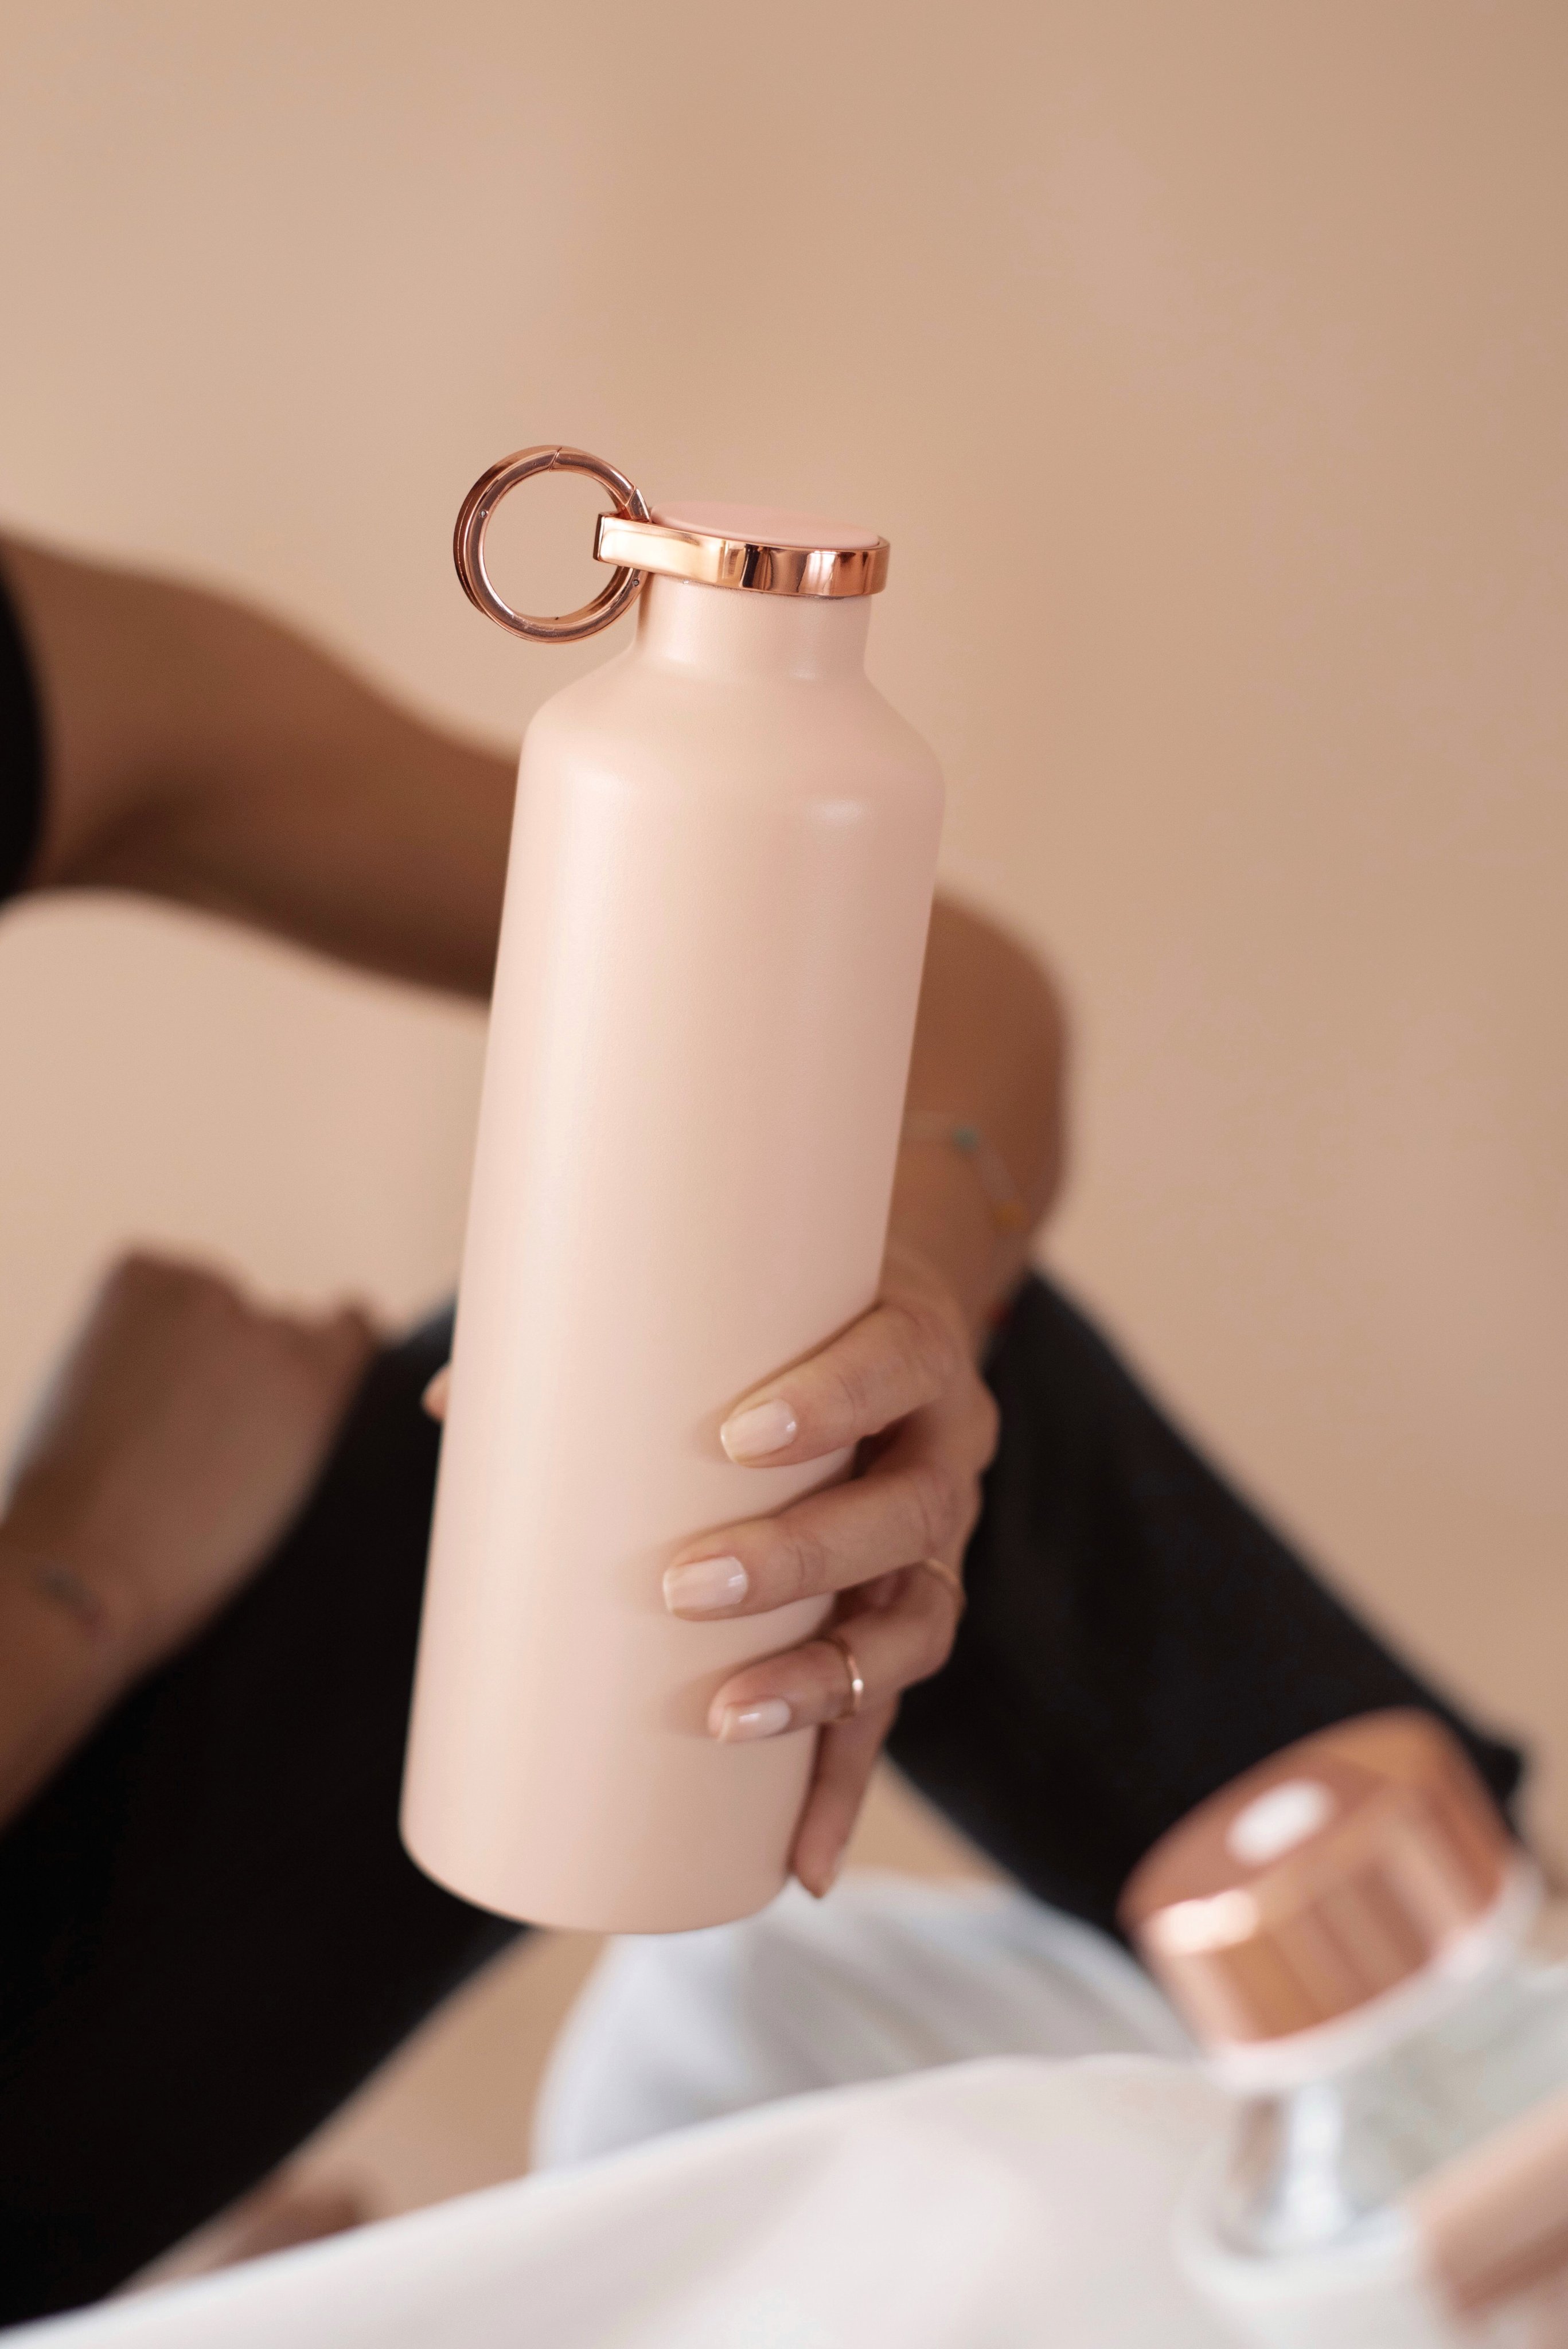 Equa Smart Water Bottle (Pink Blush)